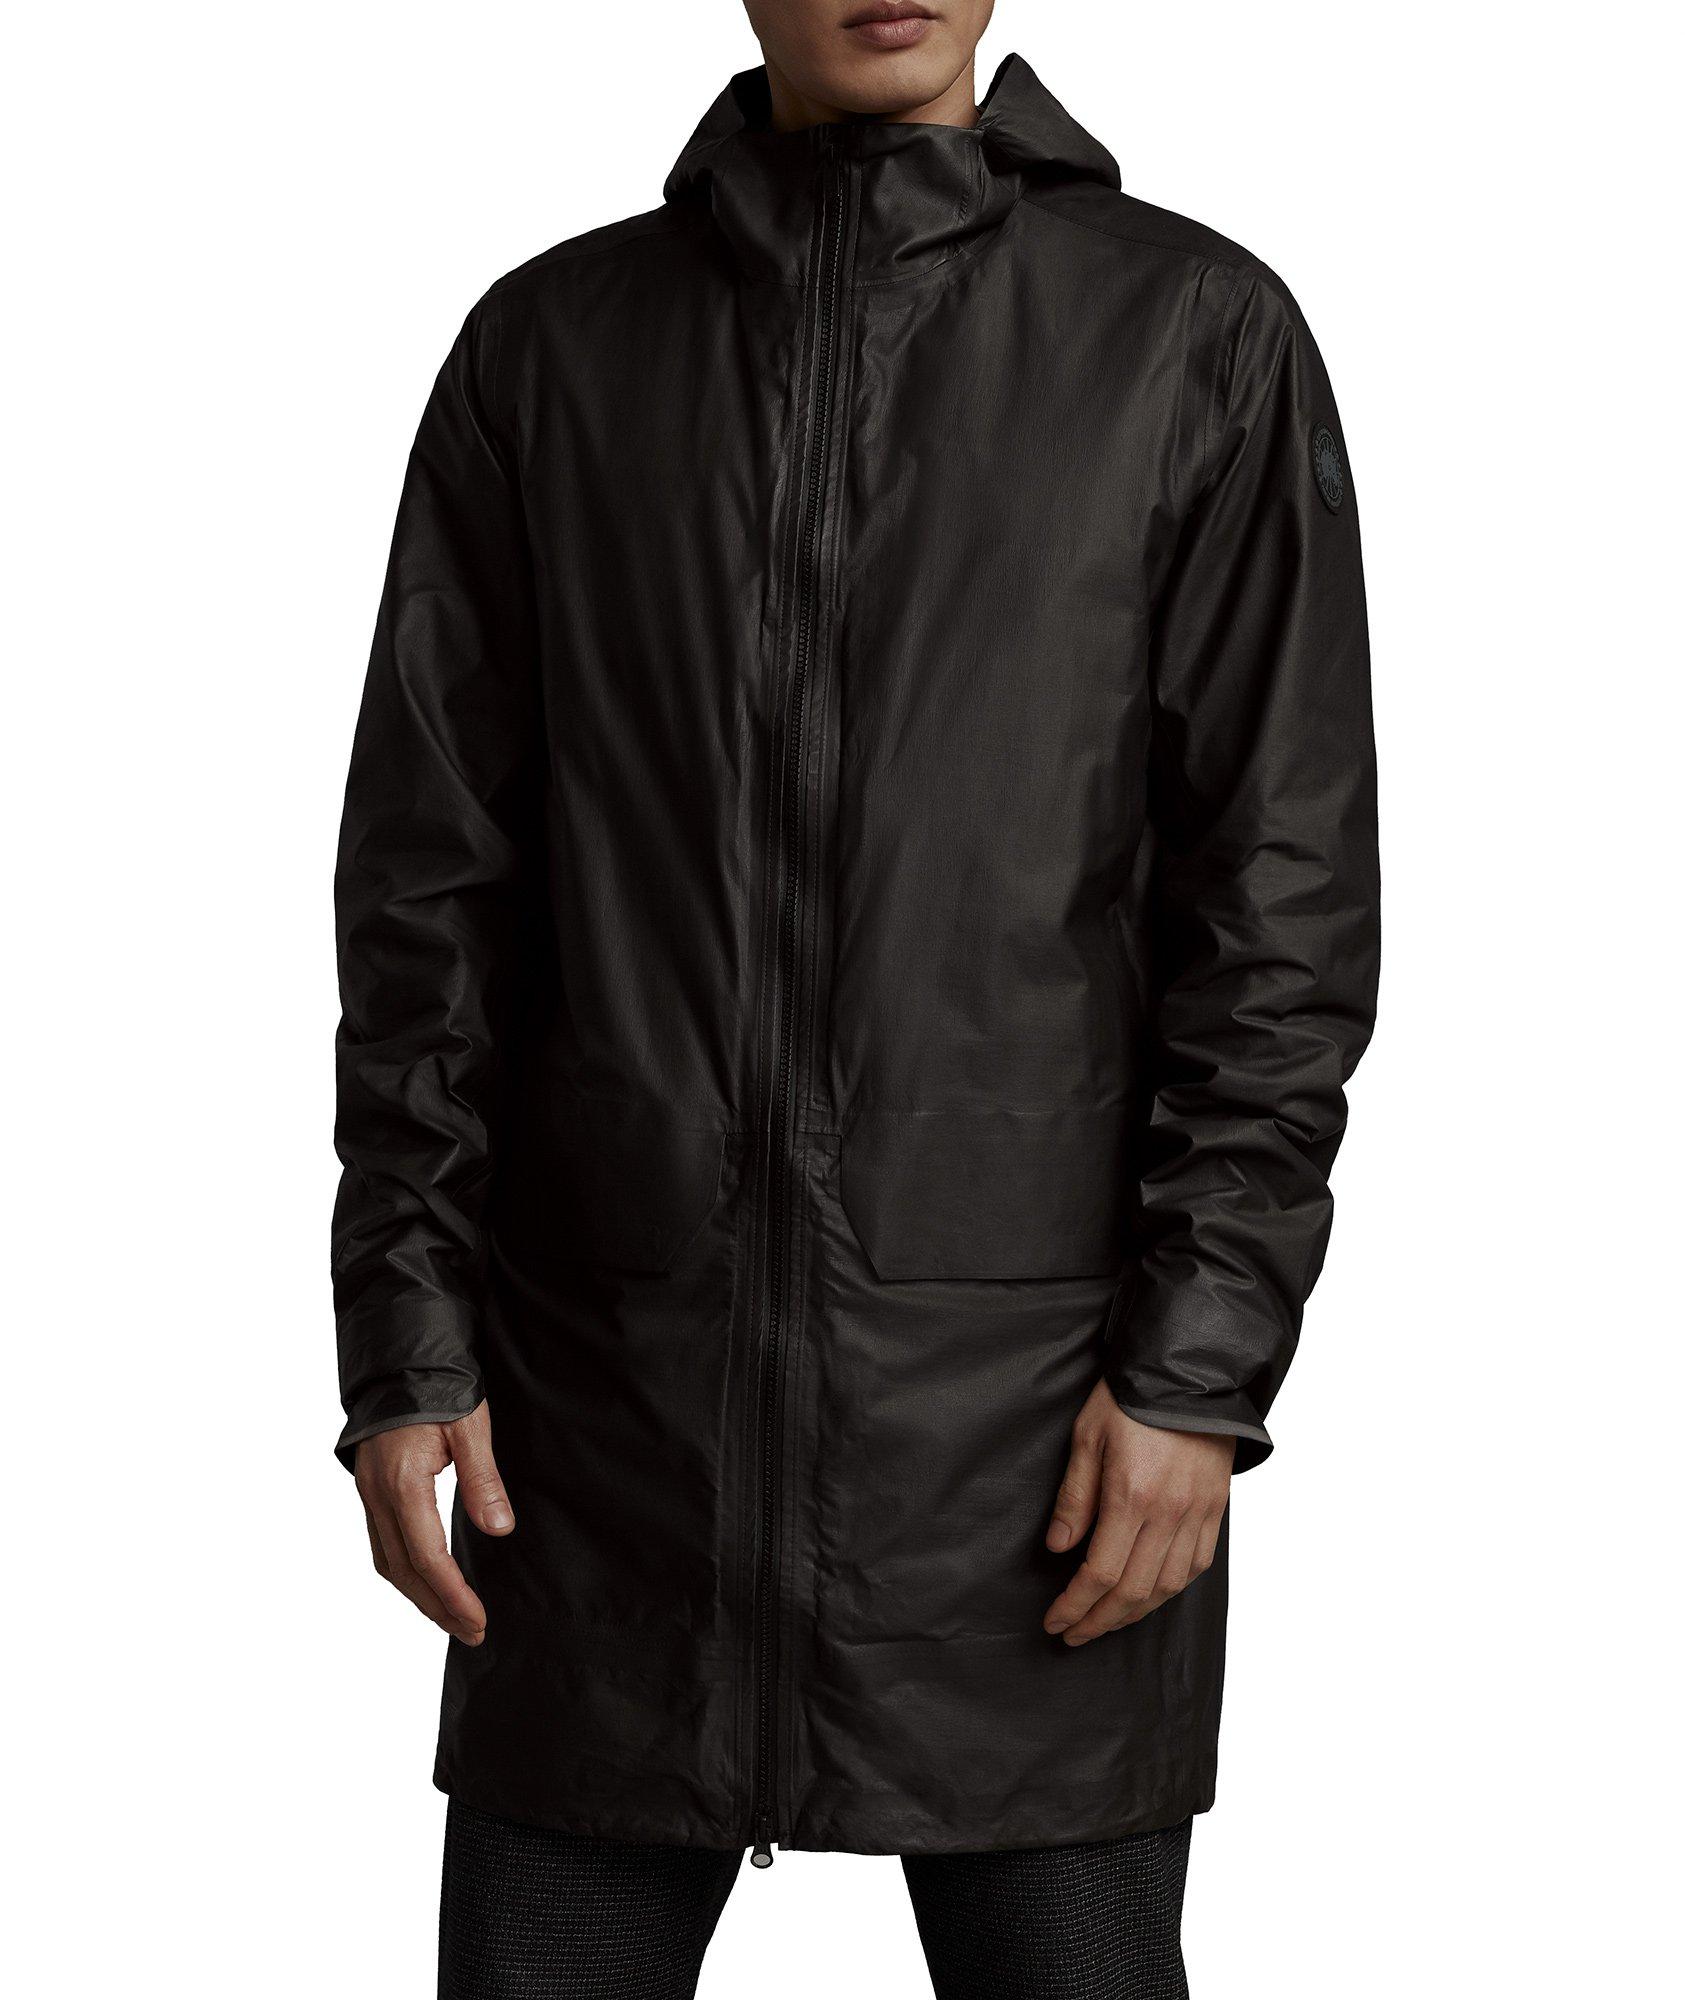 Waterproof Nomad Jacket image 0